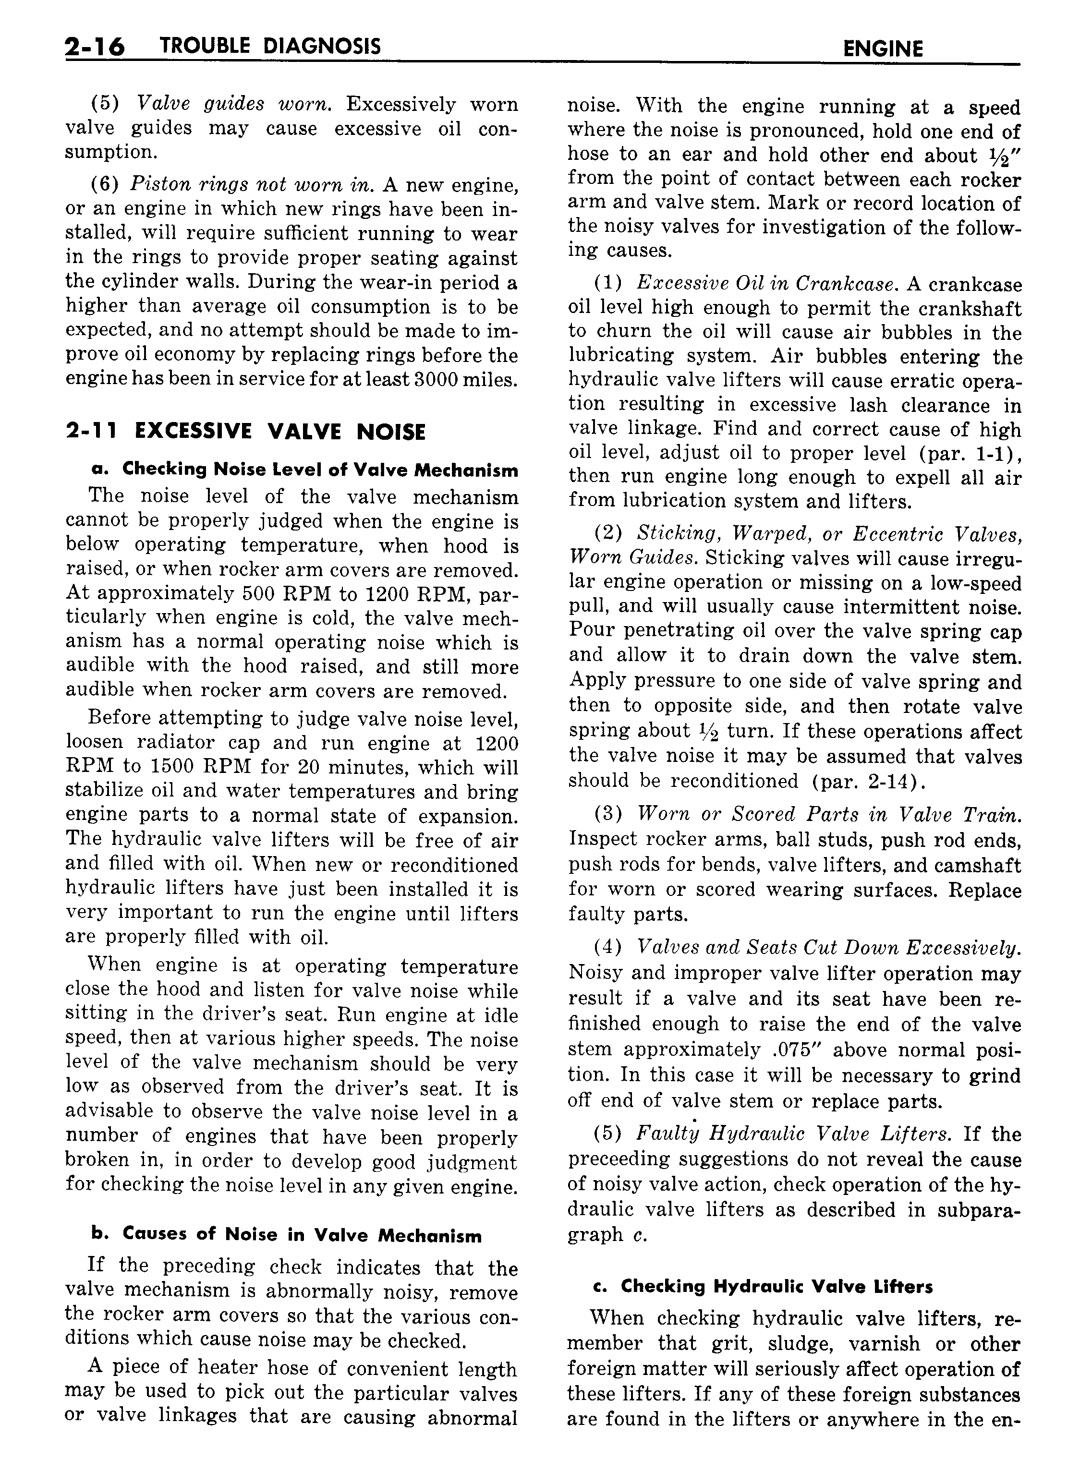 n_03 1957 Buick Shop Manual - Engine-016-016.jpg